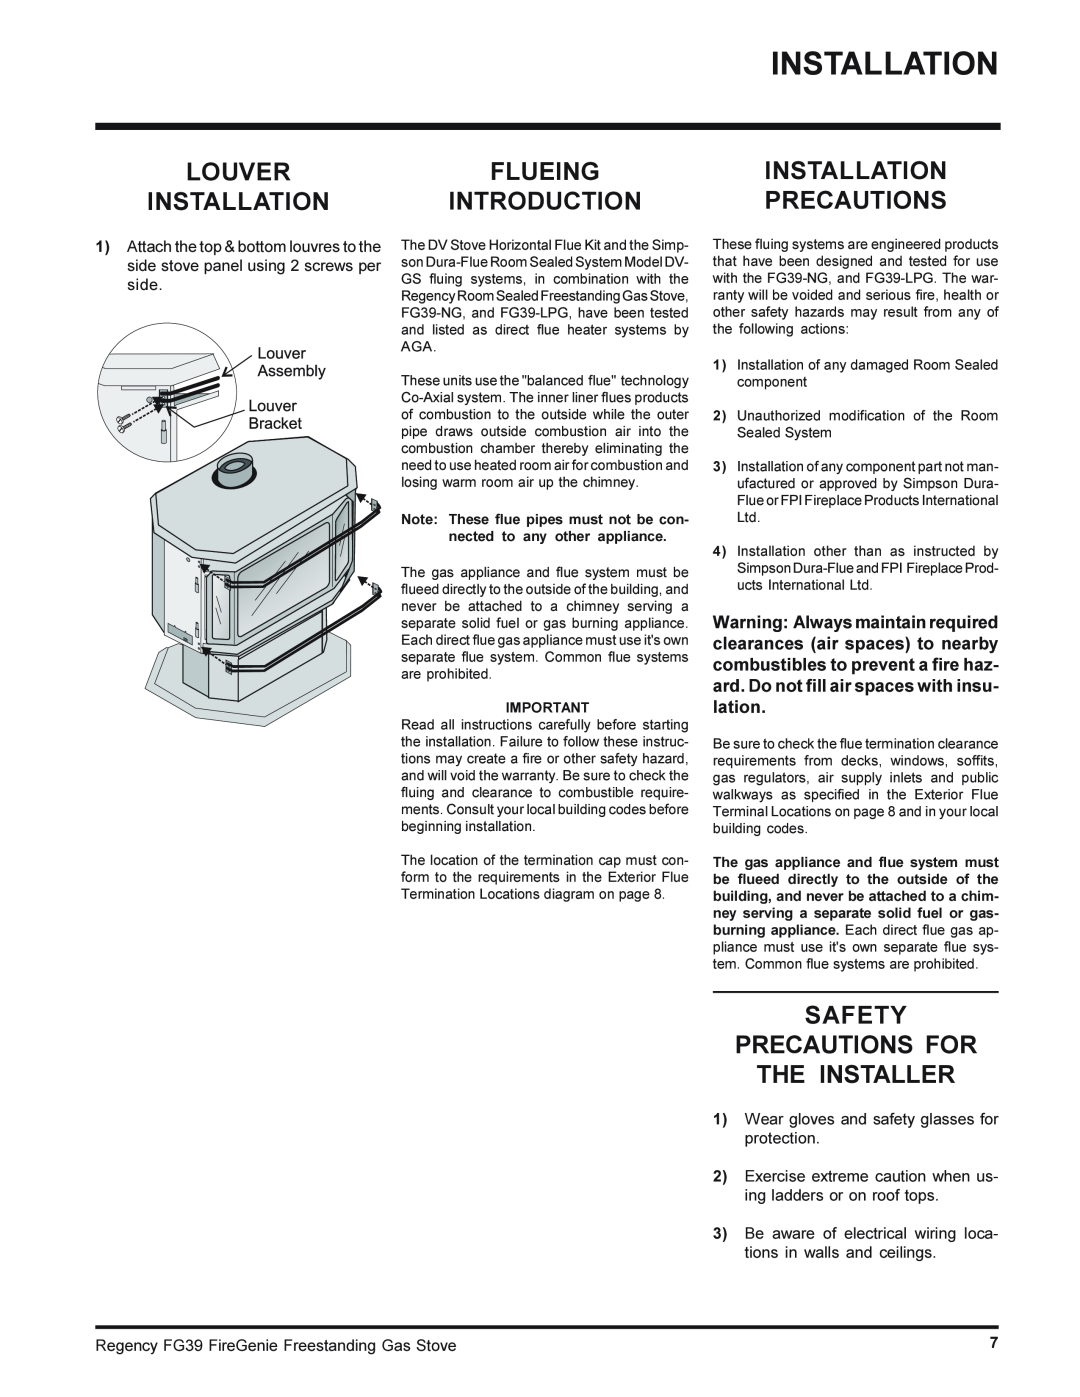 Regency FG39-NG Louver Installation, Flueing Introduction, Installation Precautions, Safety Precautions For The Installer 